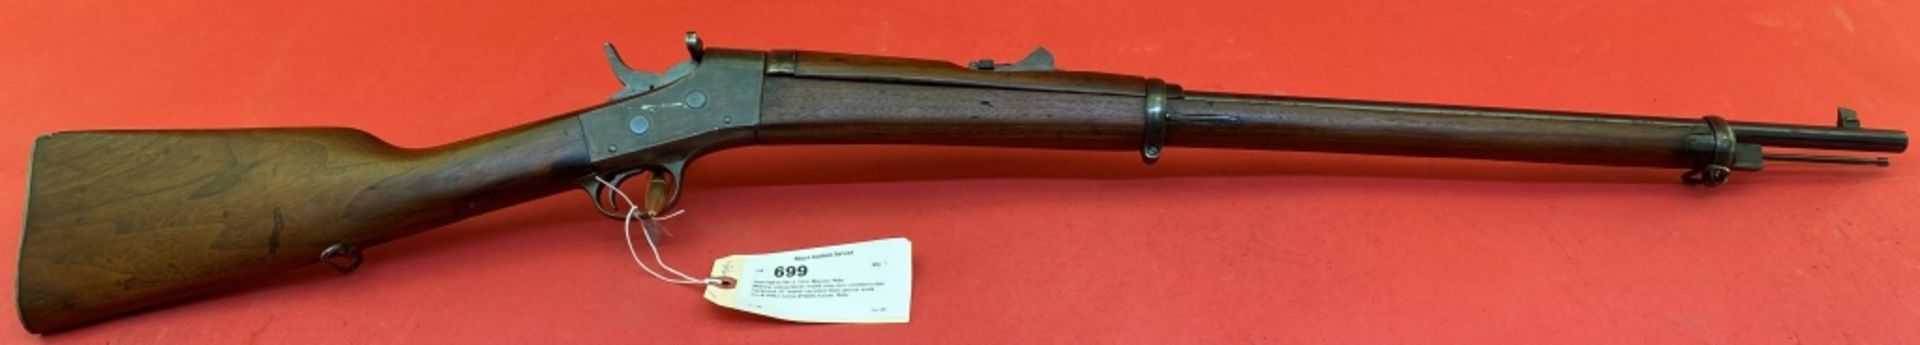 Remington No.5 7mm Mauser Rifle